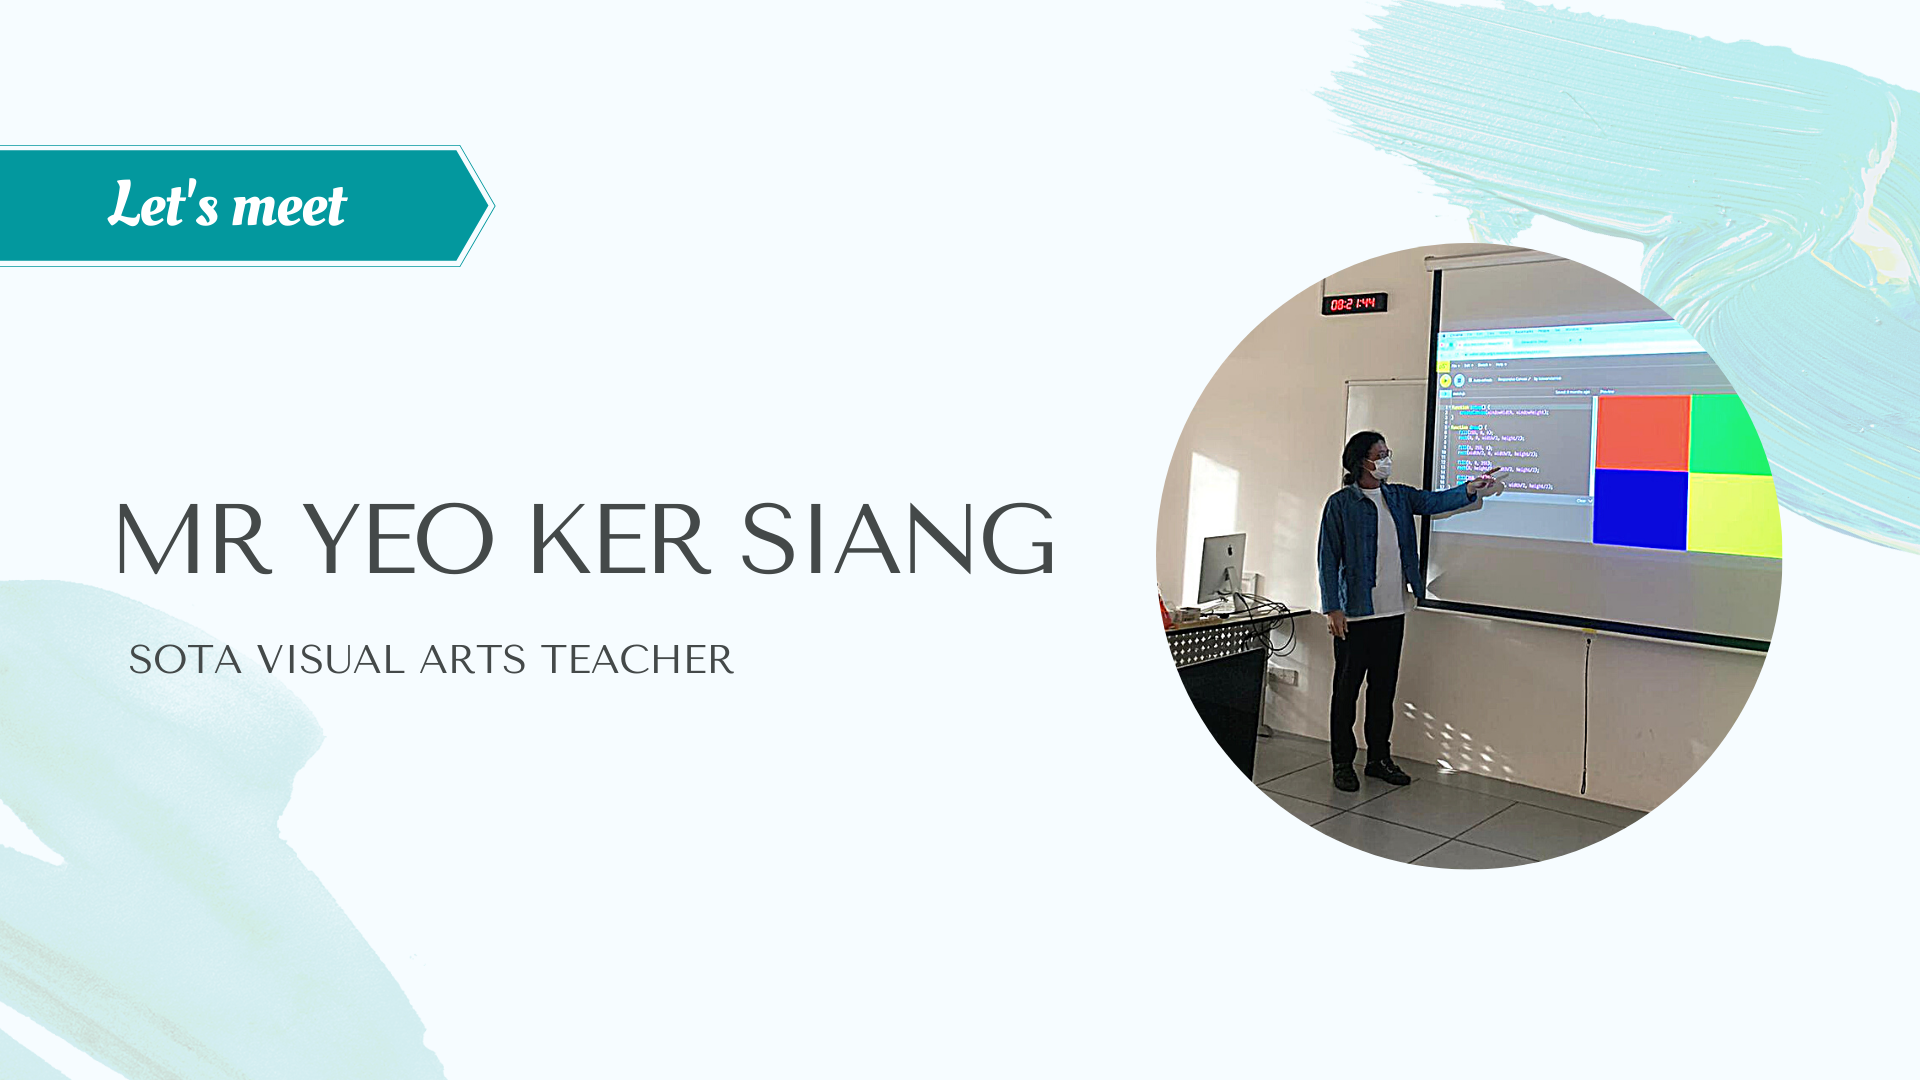 Let's meet Mr Yeo Ker Siang